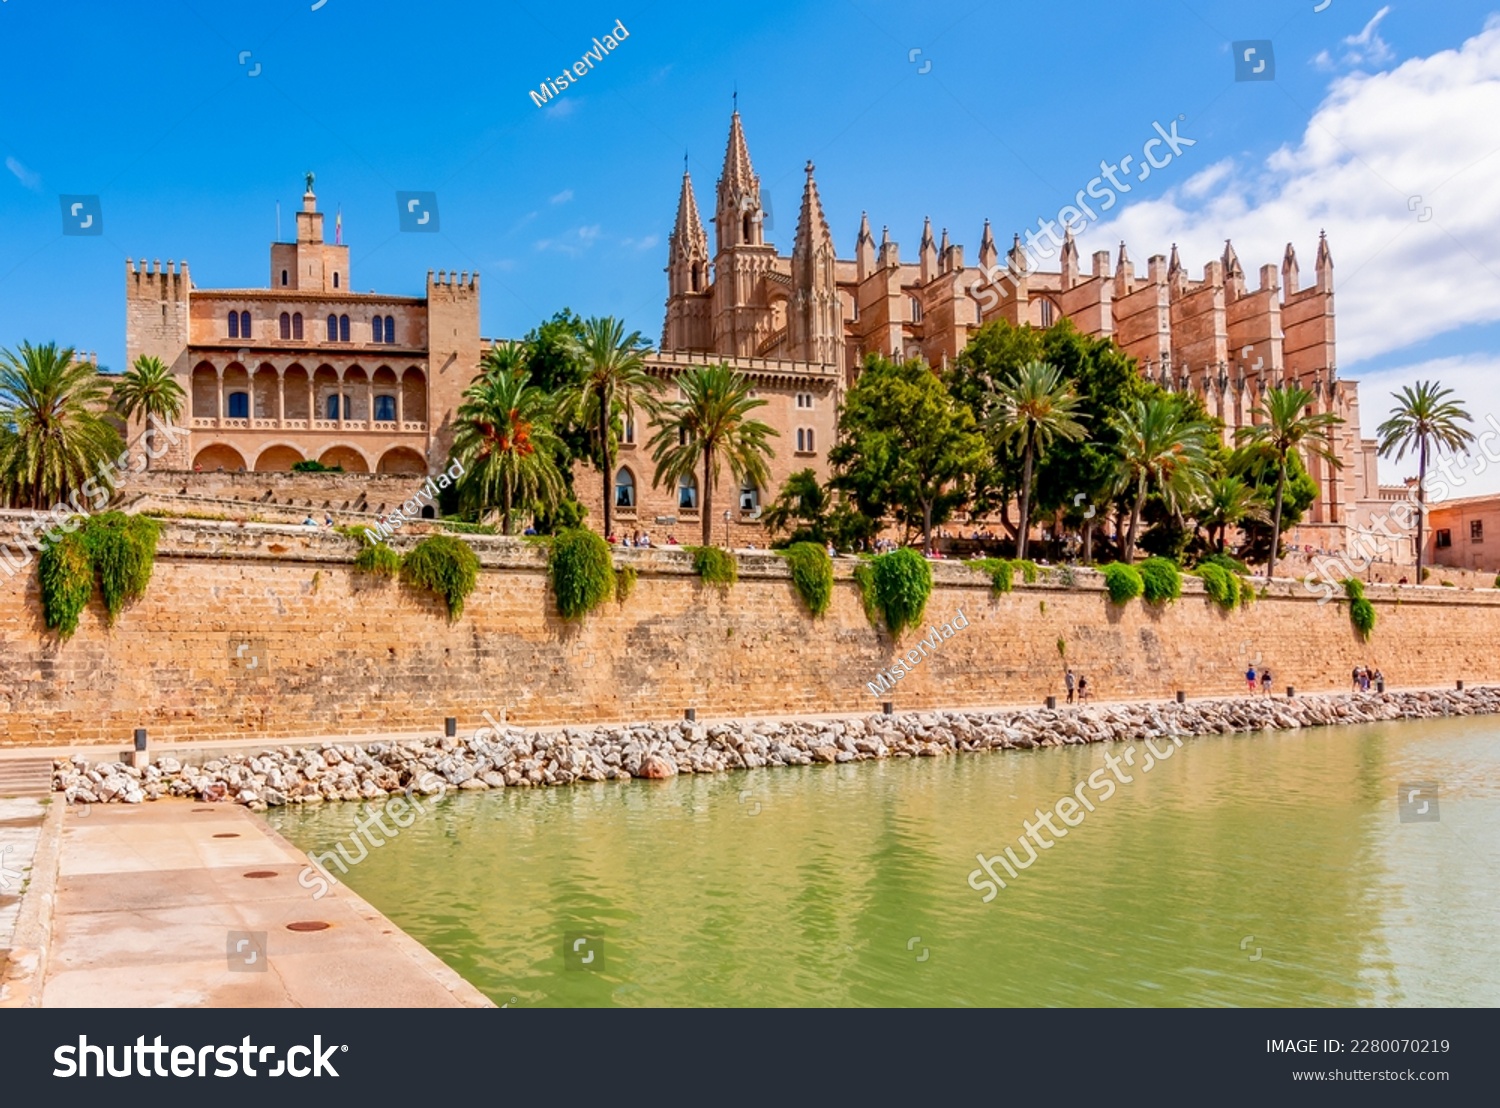 Cathedral of Santa Maria of Palma (La Seu) and Royal Palace of La Almudaina, Palma de Mallorca, Balearic islands, Spain #2280070219